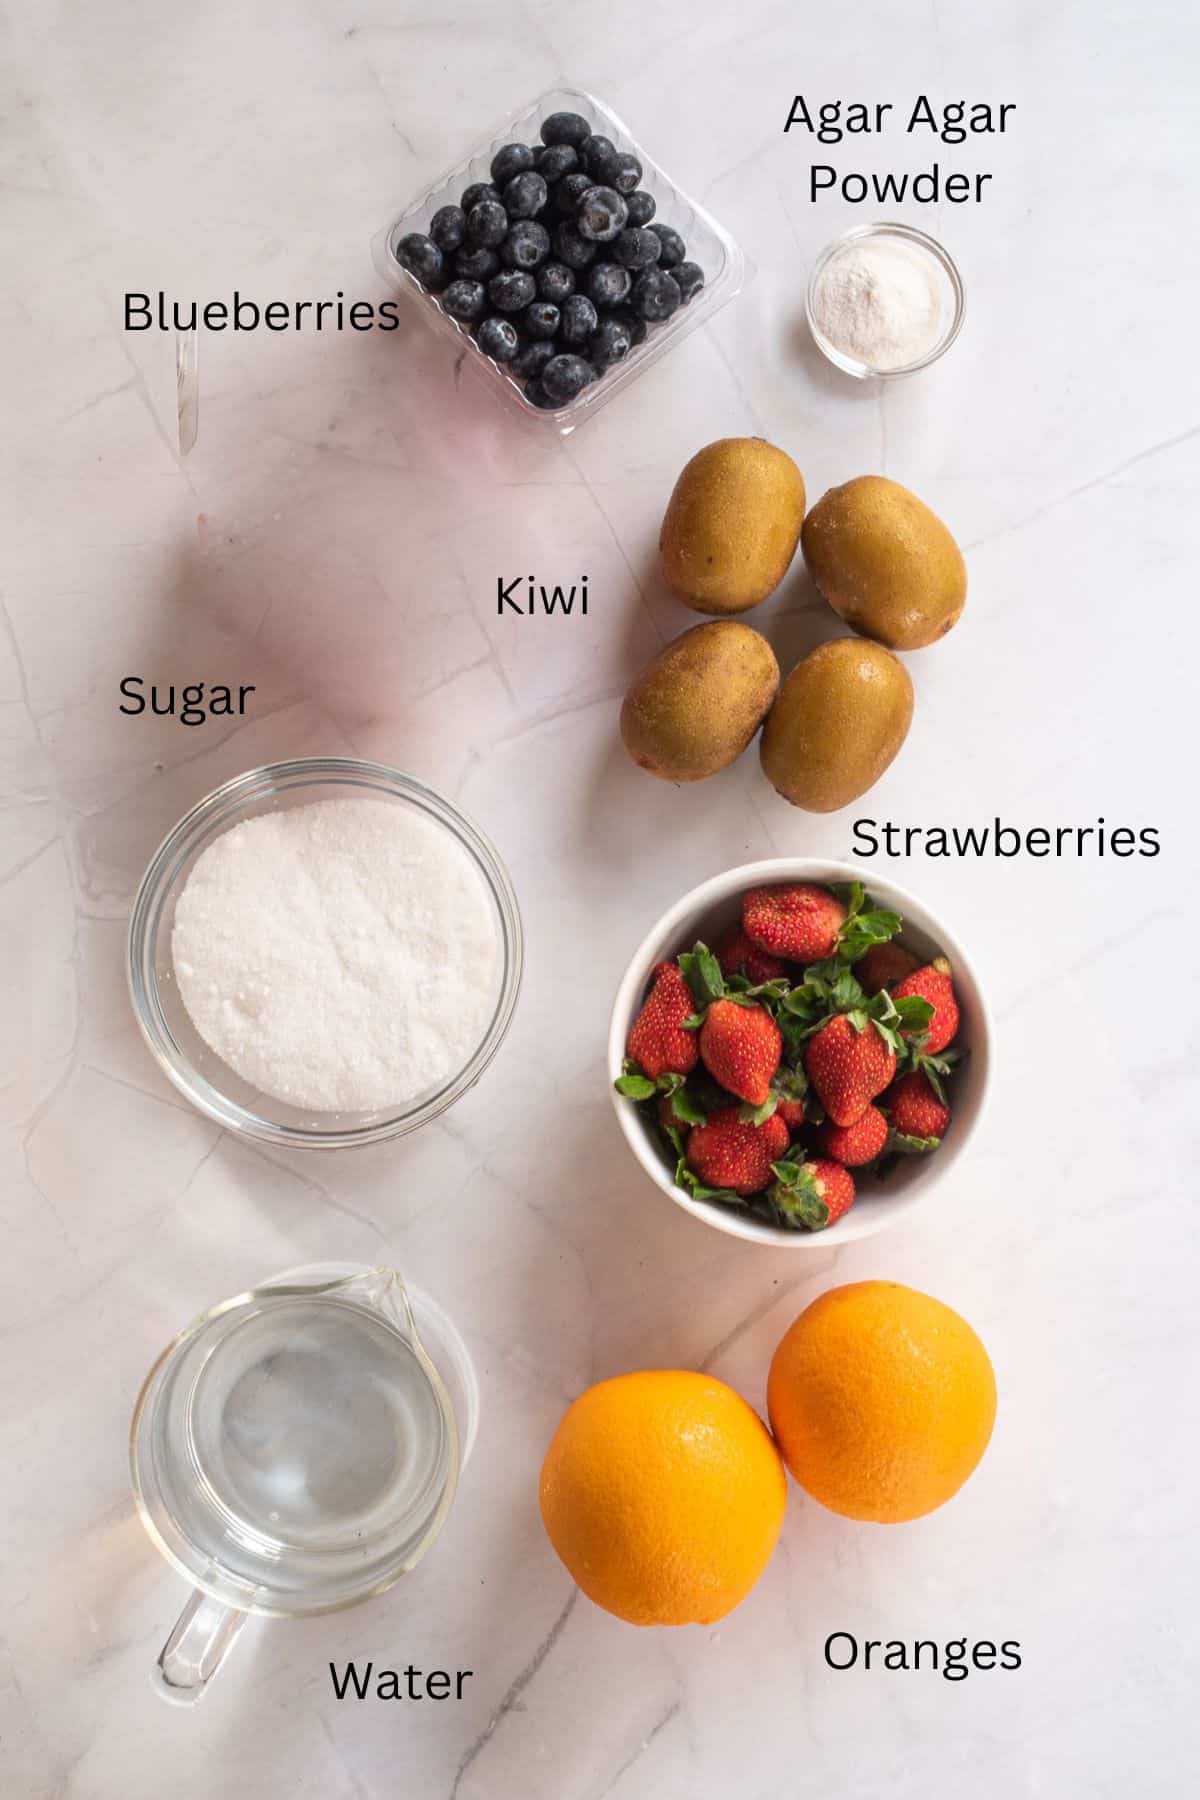 Blueberries, strawberries, kiwis, oranges, agar agar powder, sugar and water against a marble background.